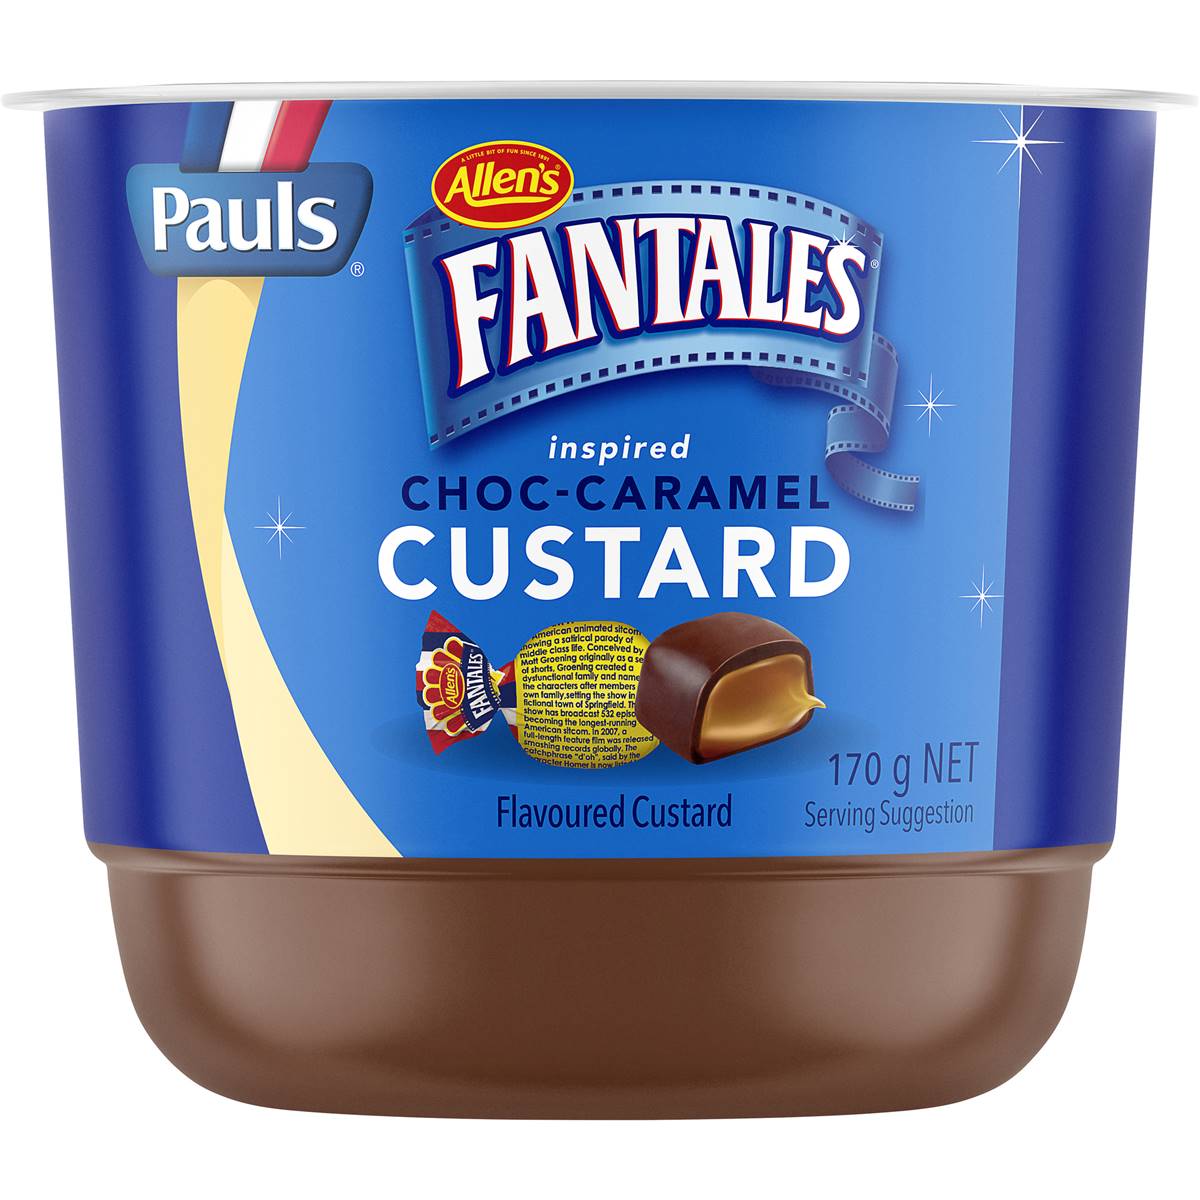 Calories in Pauls Allen's Fantales Inspired Choc Caramel Custard